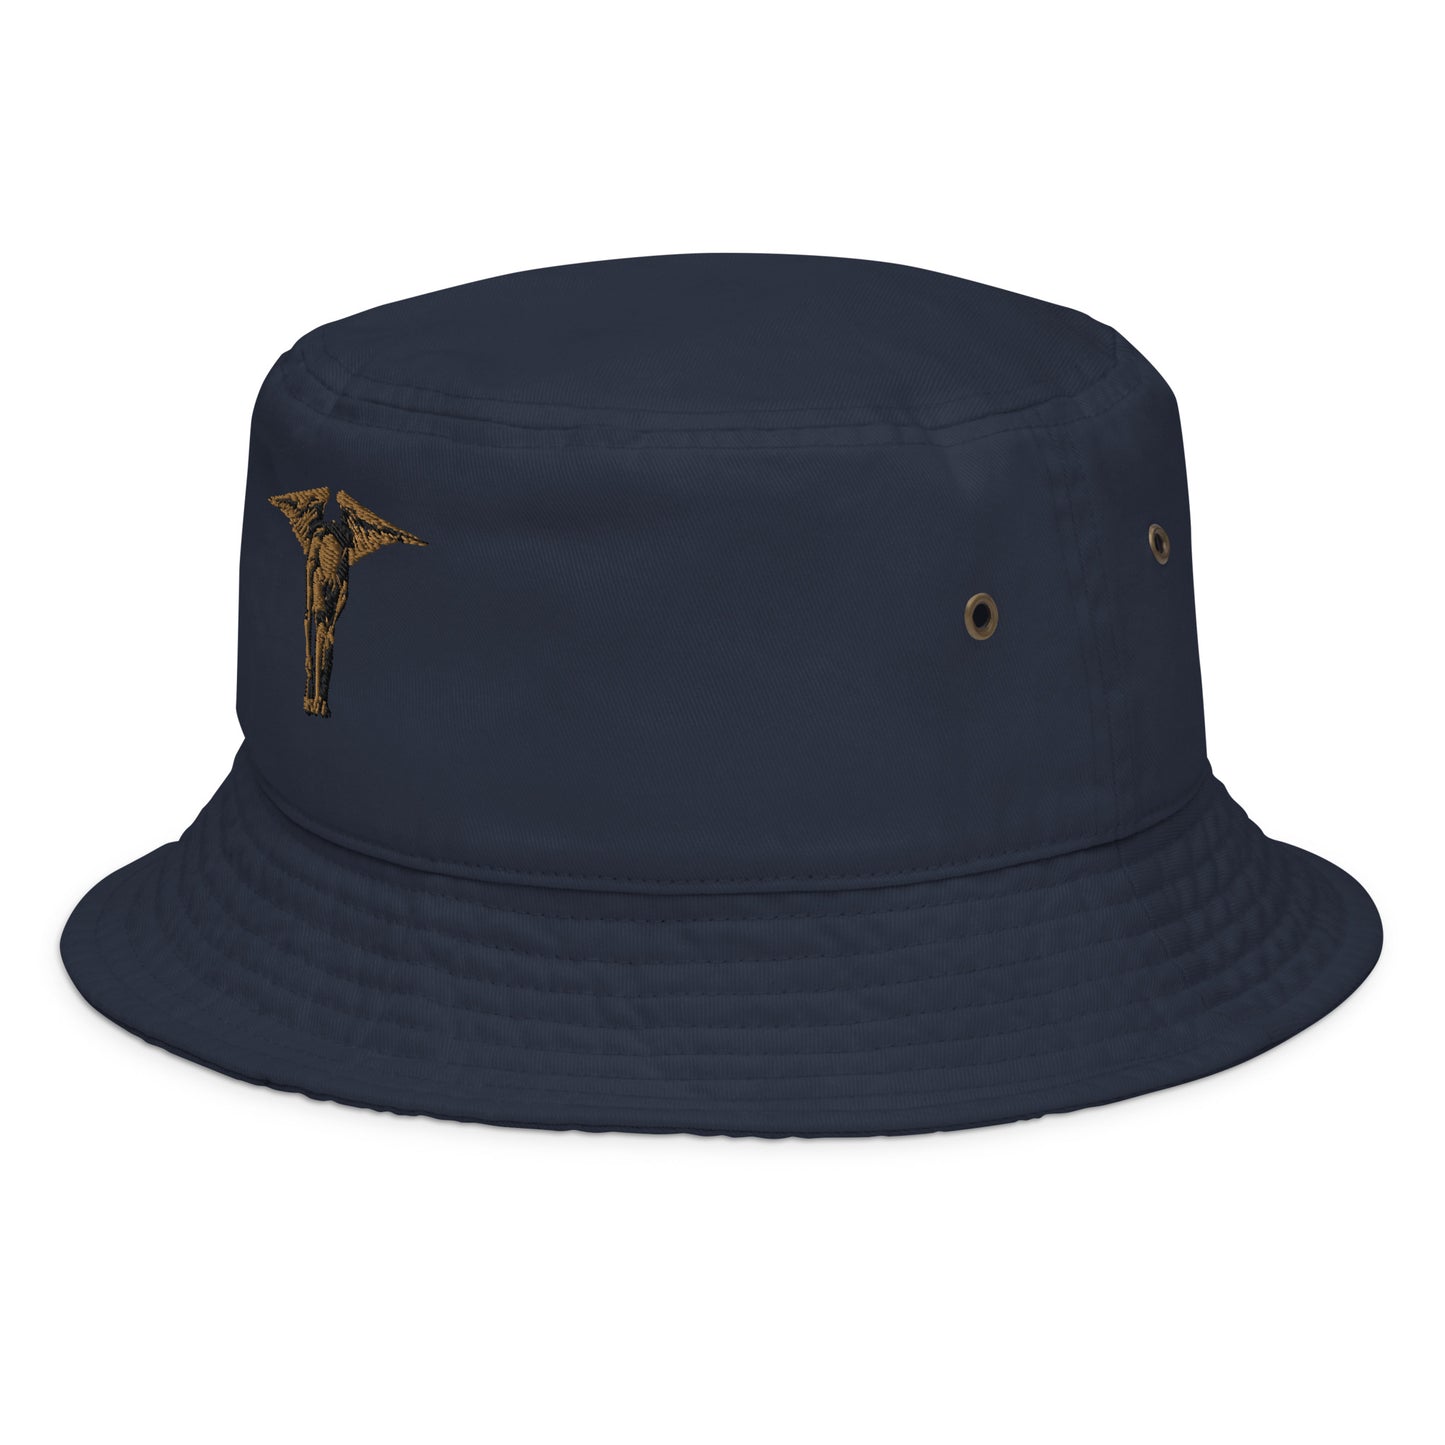 Gold Angel - Fashion bucket hat